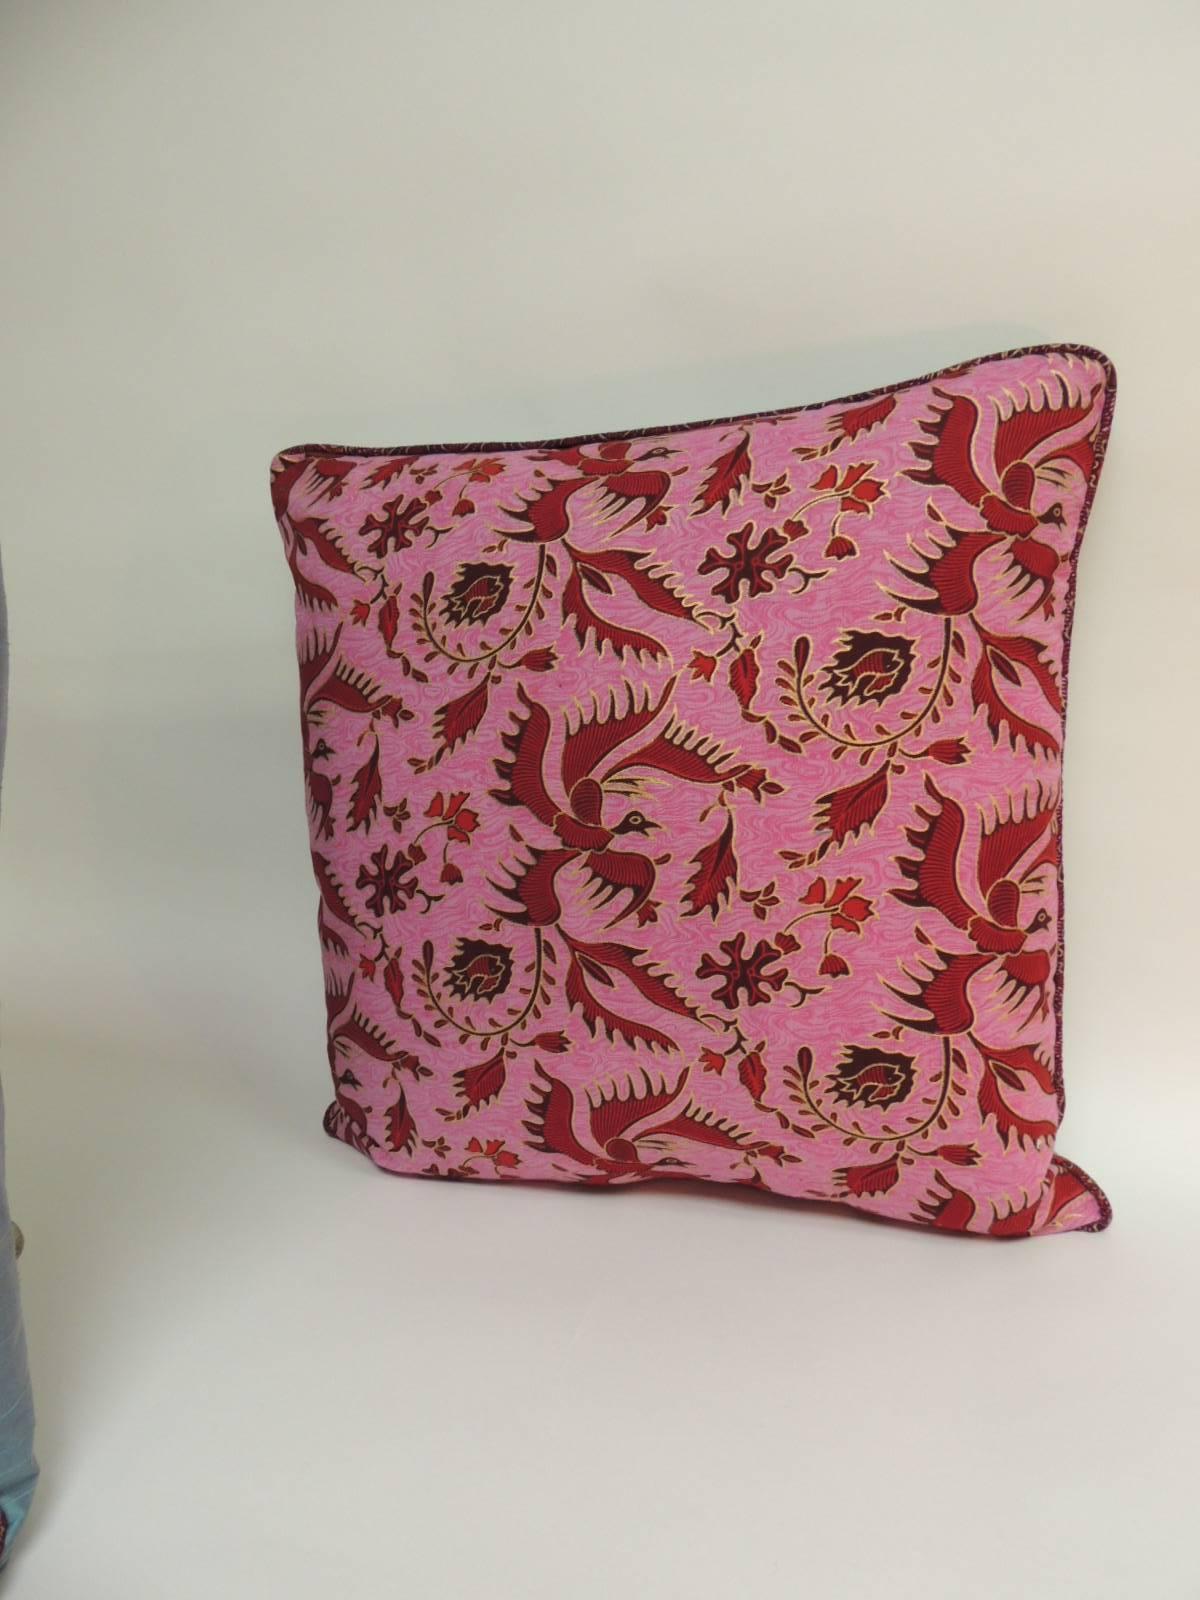 Moorish Pair of Vintage Red and Pink Hand-Blocked Batik Decorative Pillows